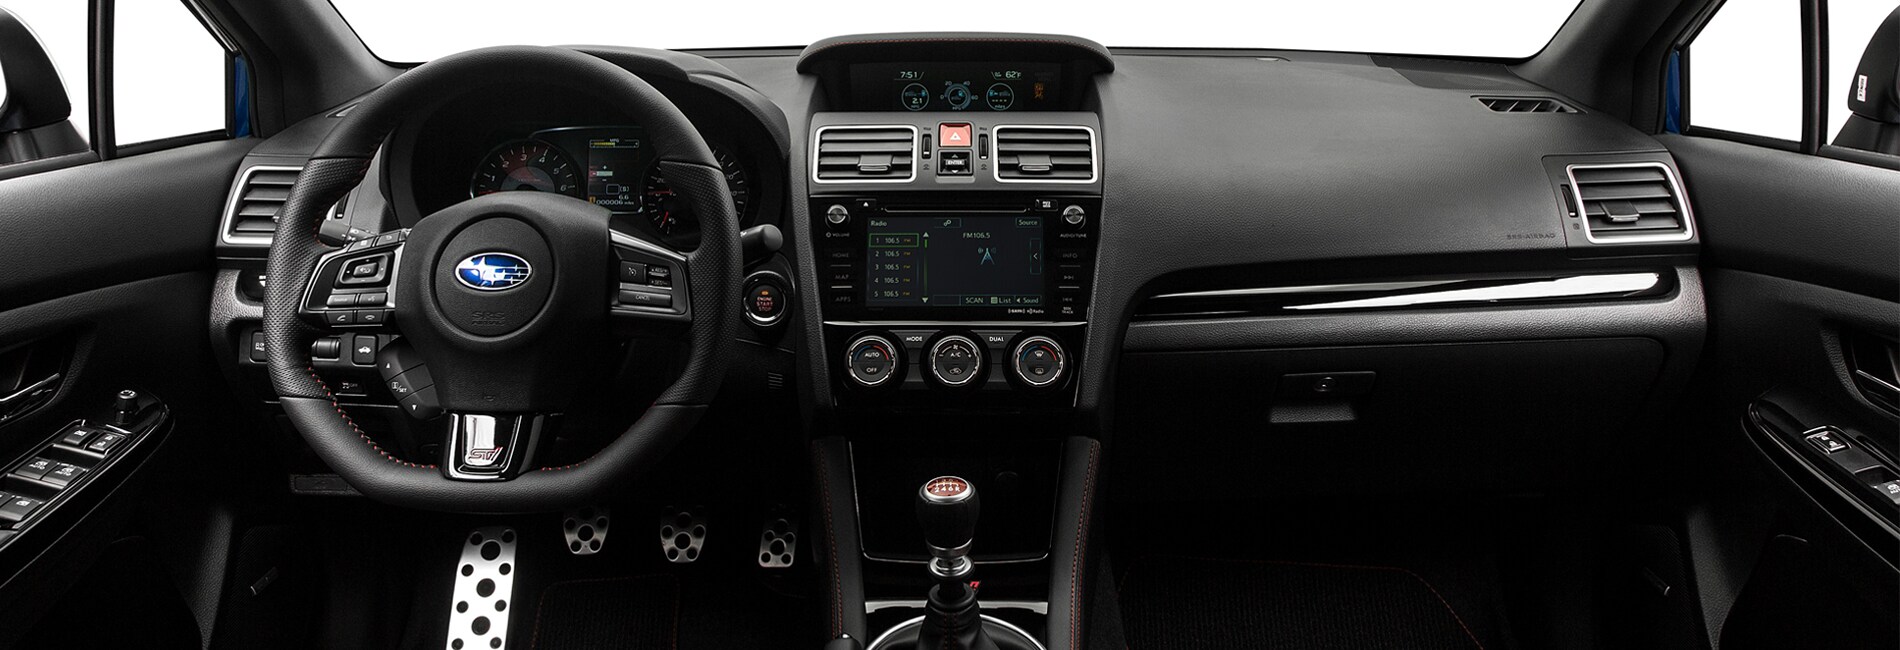 2019 Subaru WRX Interior Features